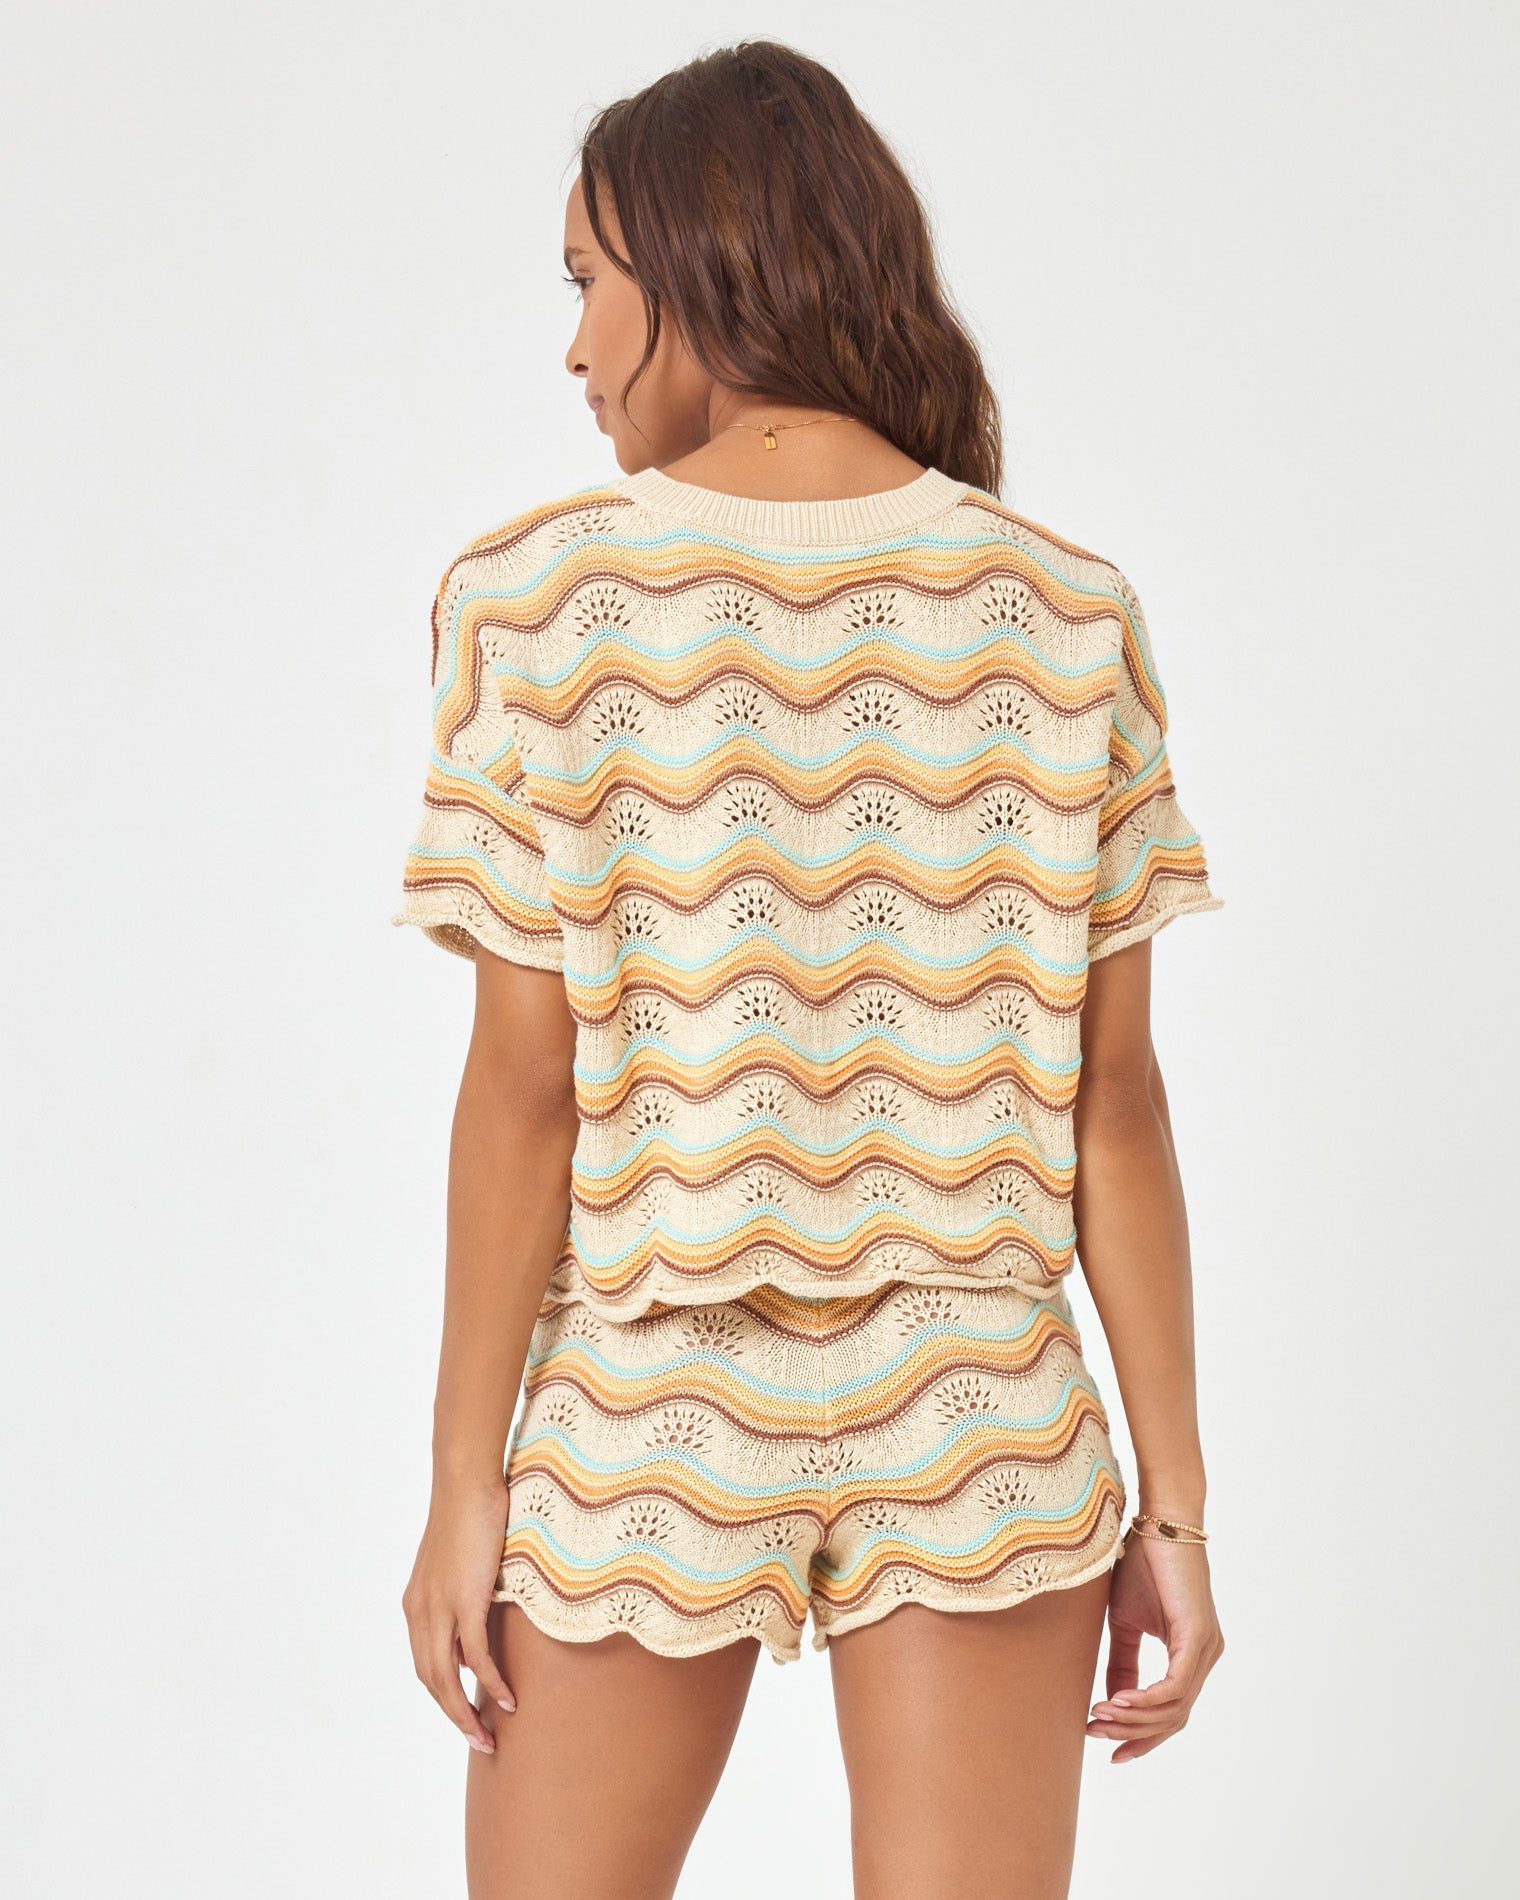 Make Waves Sweater Sano Stripe | Model: Natalie (size: S)